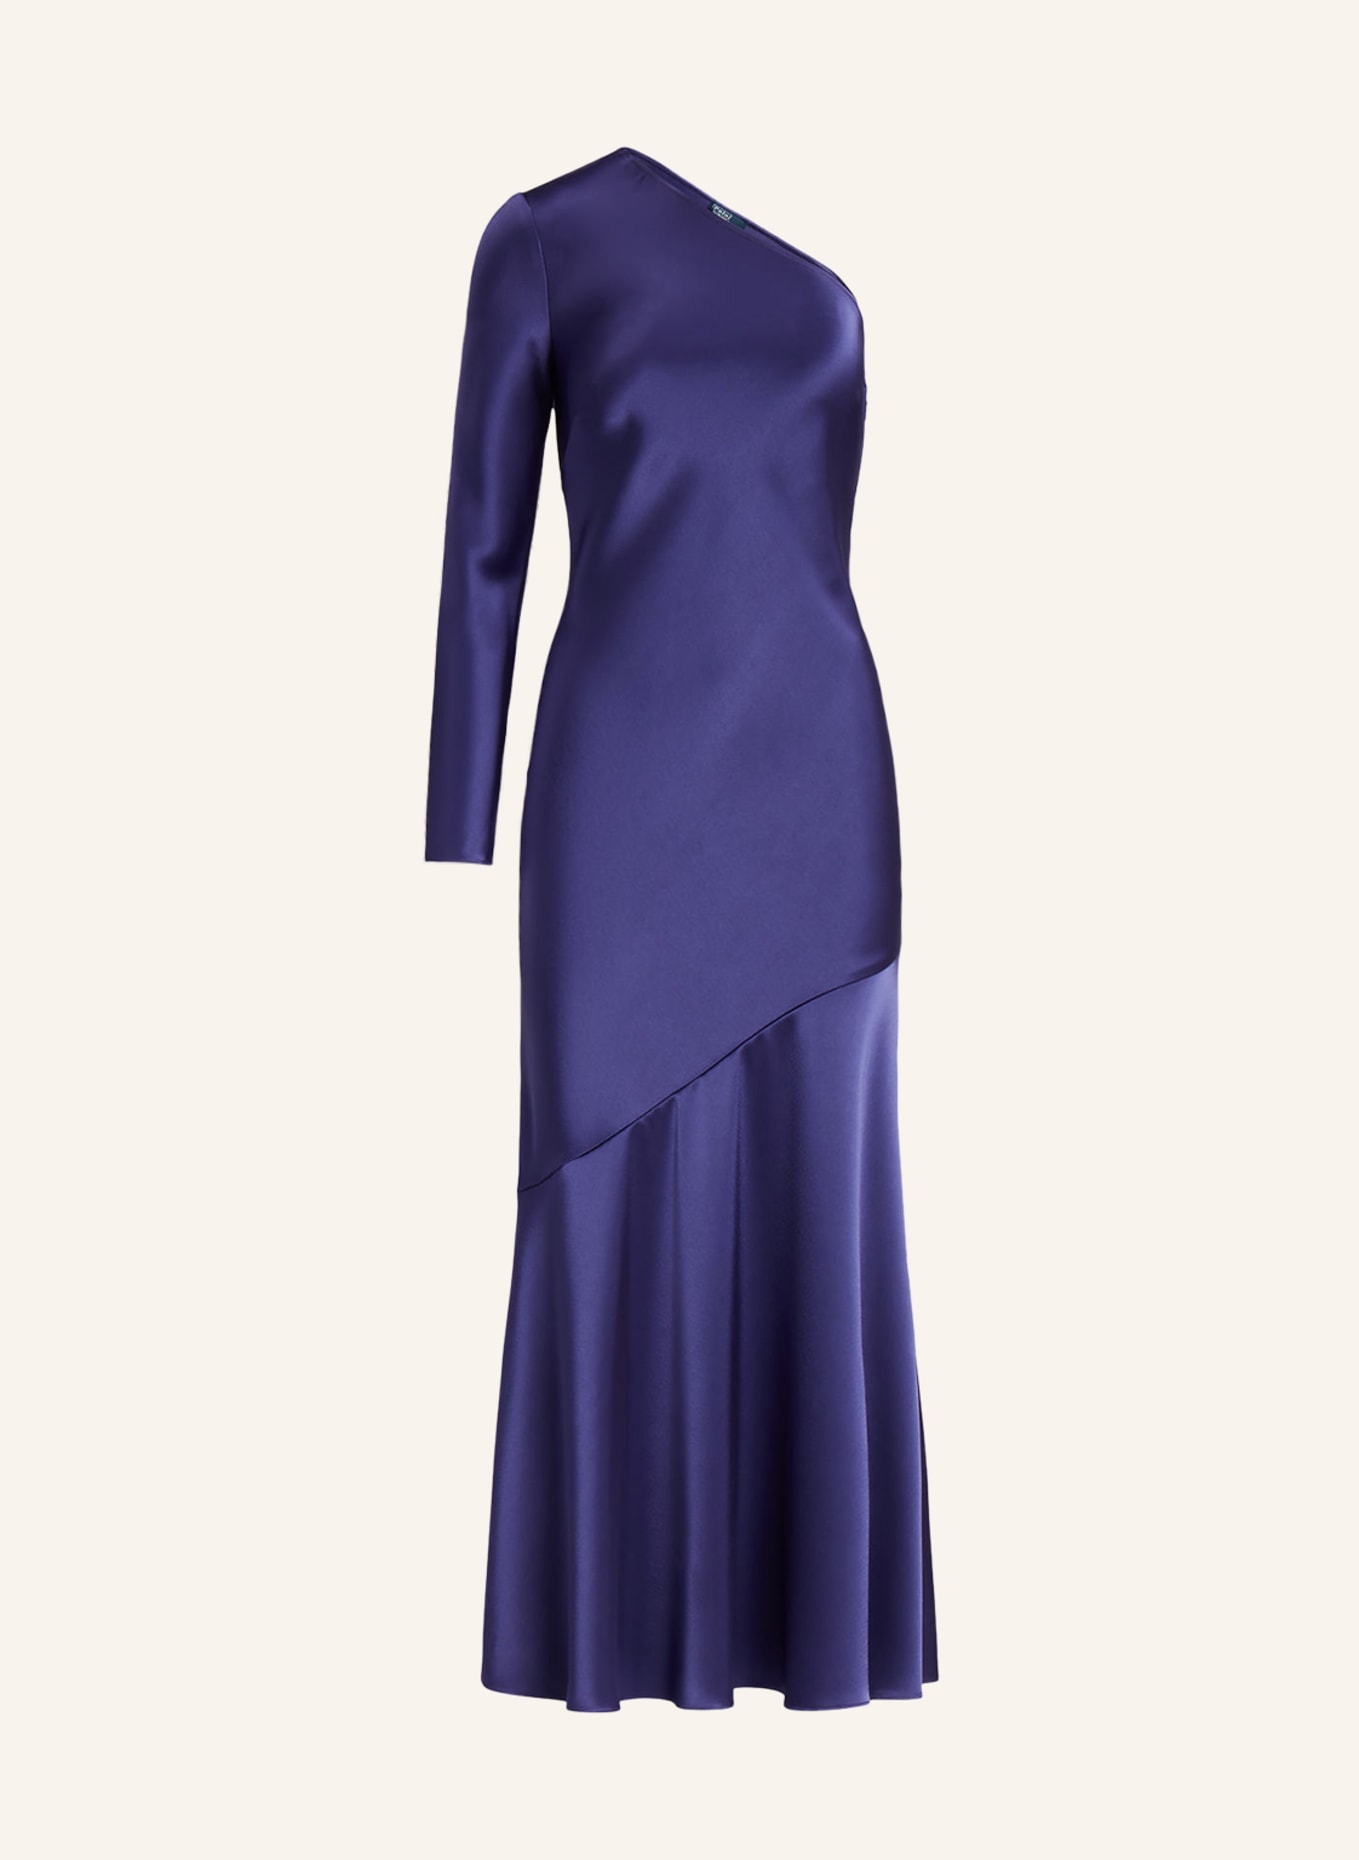 POLO RALPH LAUREN One-shoulder dress made of satin, Color: DARK BLUE (Image 1)